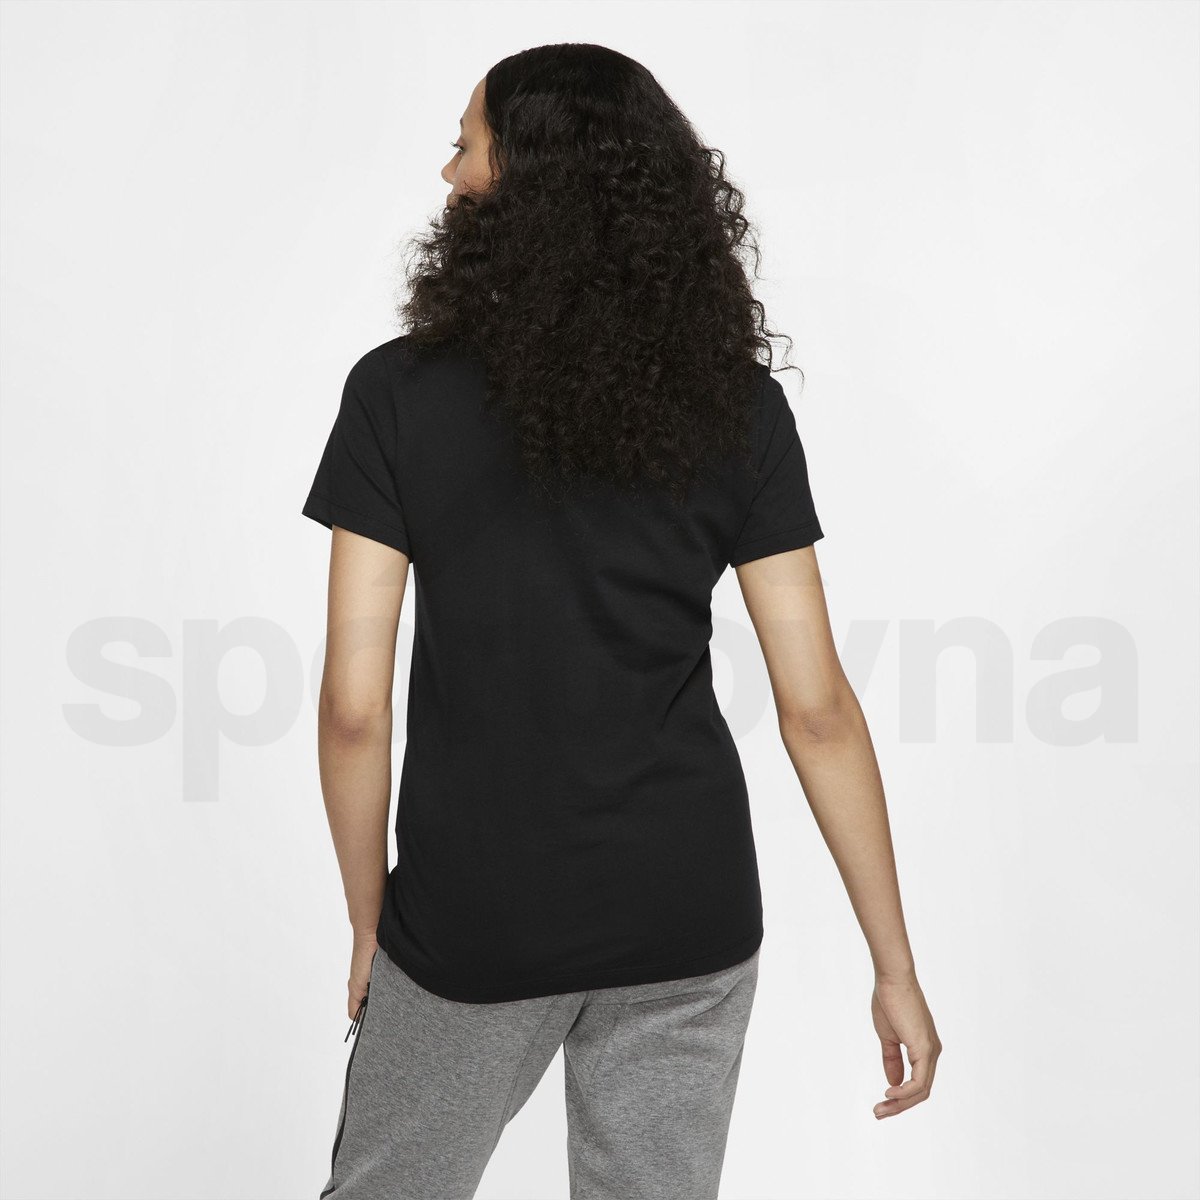 Tričko Nike Icon Futura W - černá